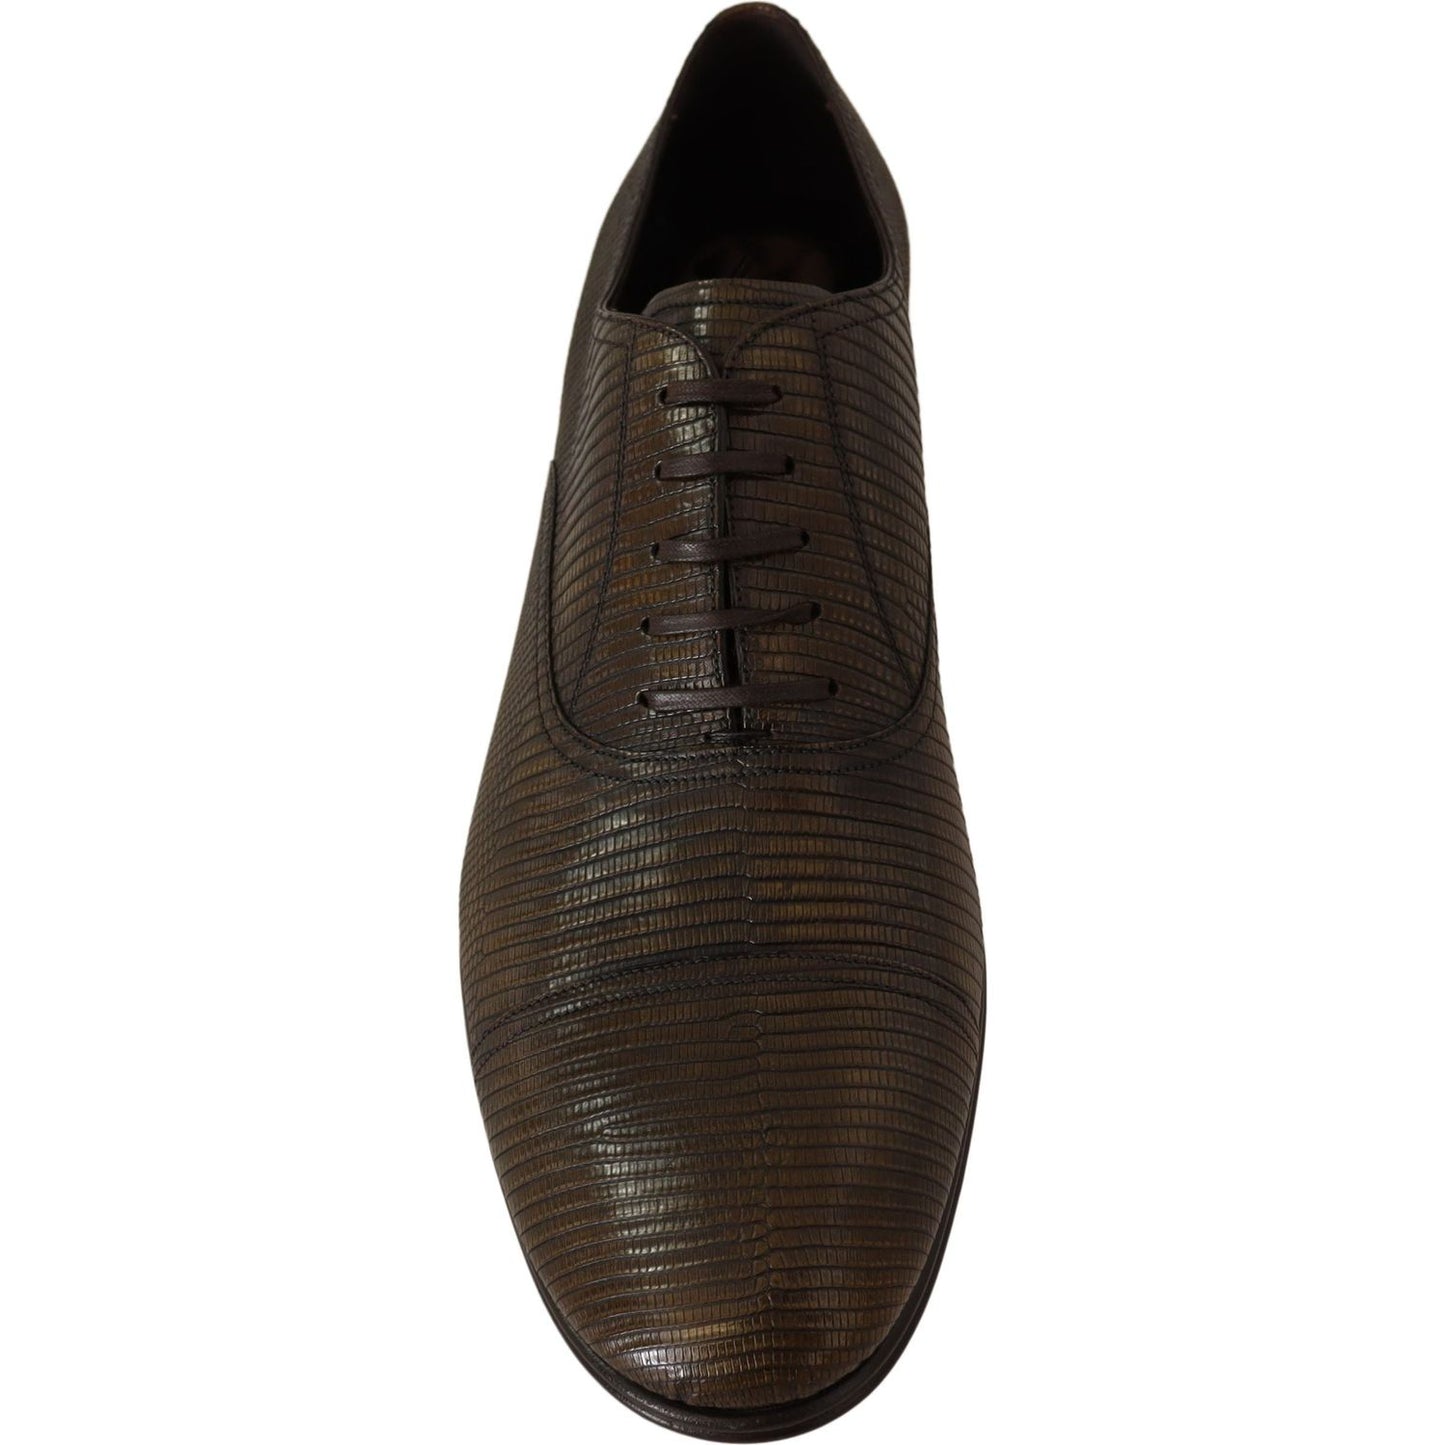 Dolce & Gabbana Elegant Shiny Leather Oxford Shoes Dress Shoes brown-lizard-leather-dress-oxford-shoes IMG_0051-scaled-fdf79c6d-258.jpg